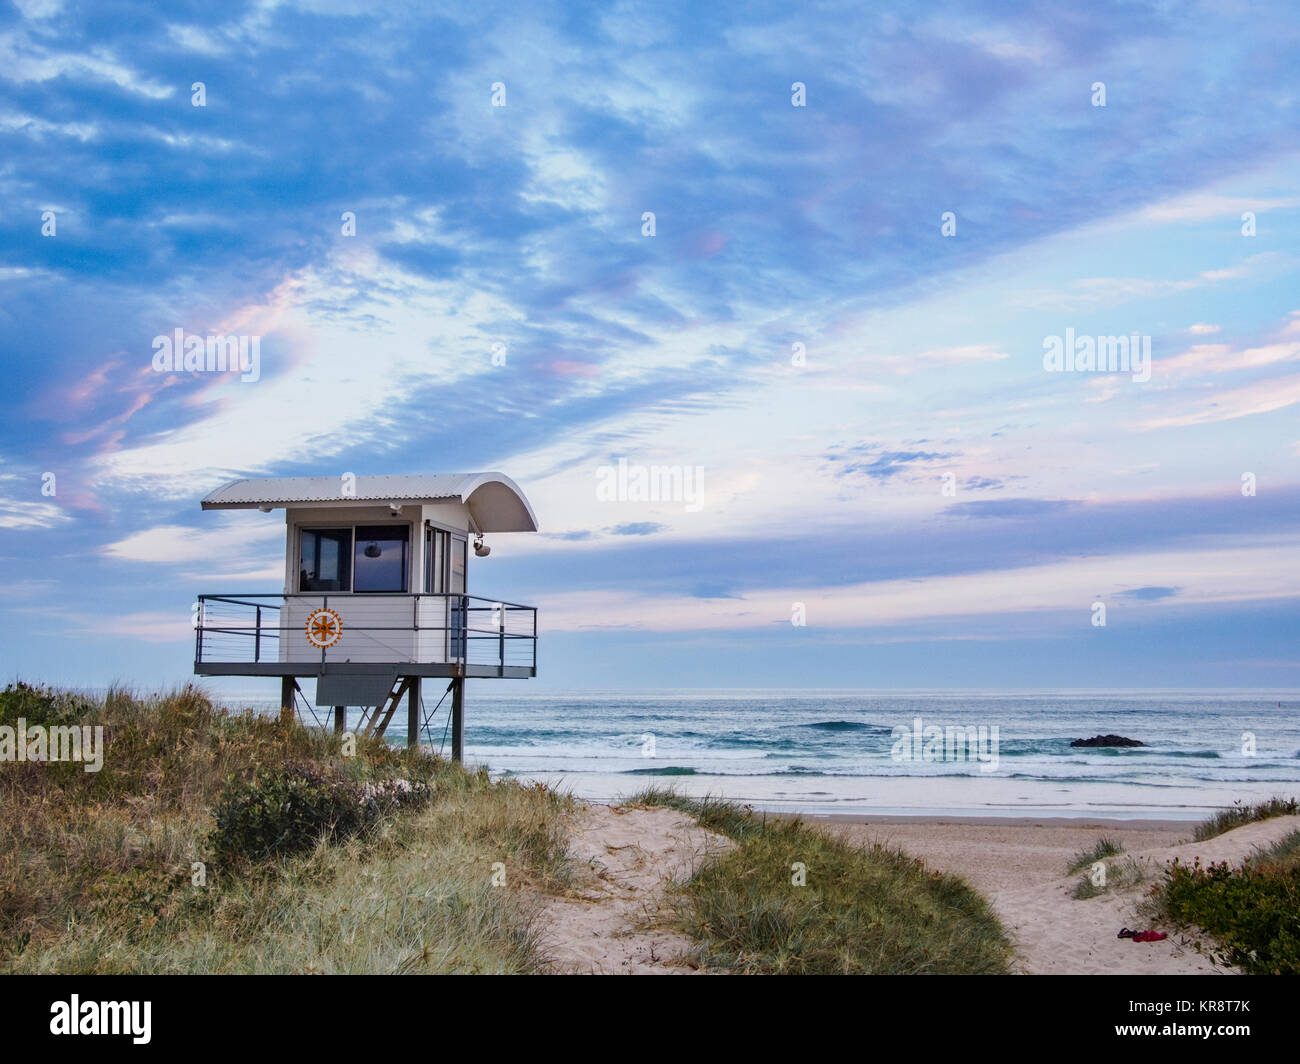 Australia, New South Wales, Lifeguard hut against moody sky Stock Photo